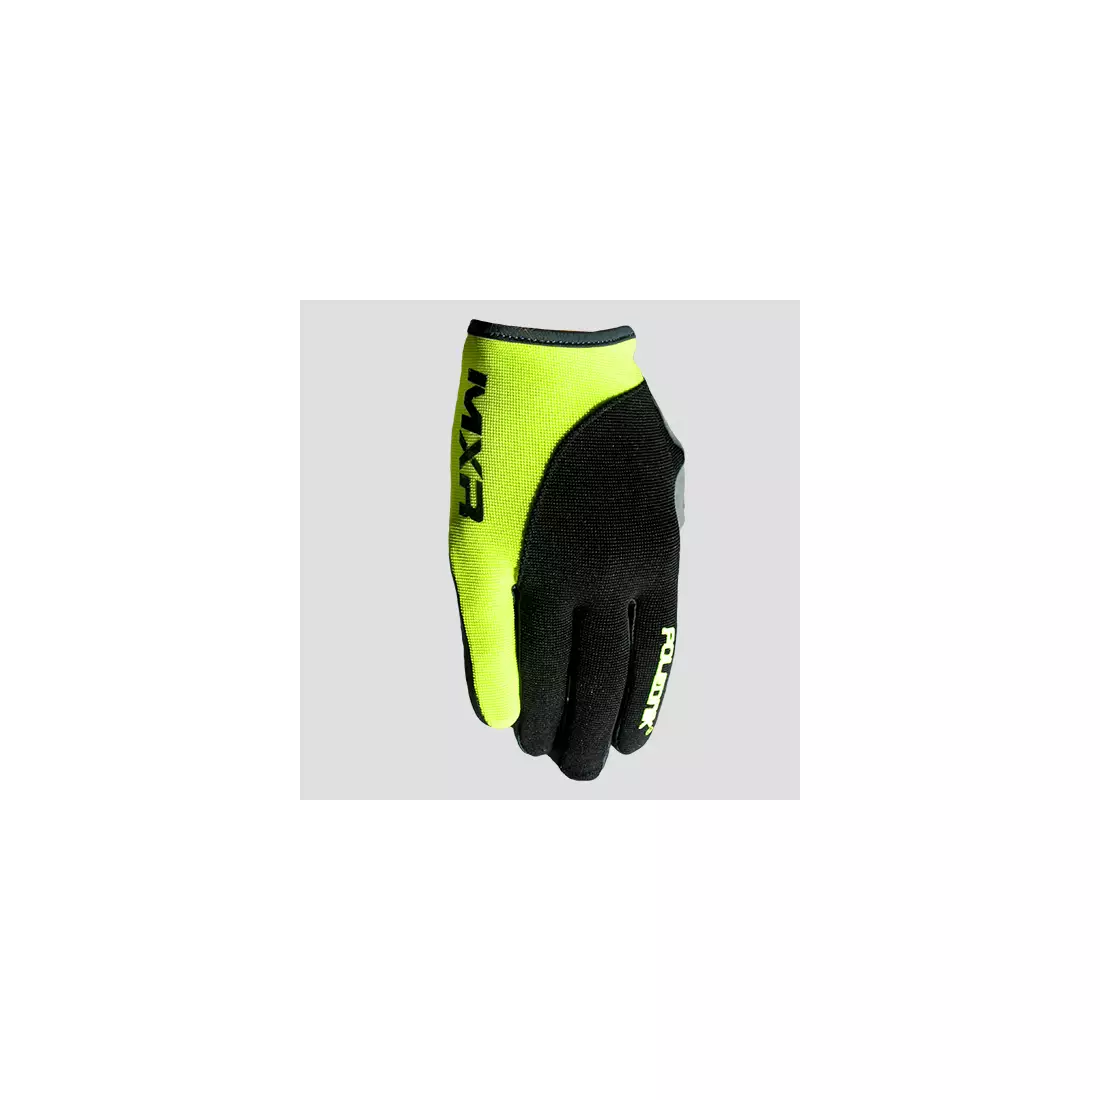 POLEDNIK MXR cycling gloves, color: fluorine